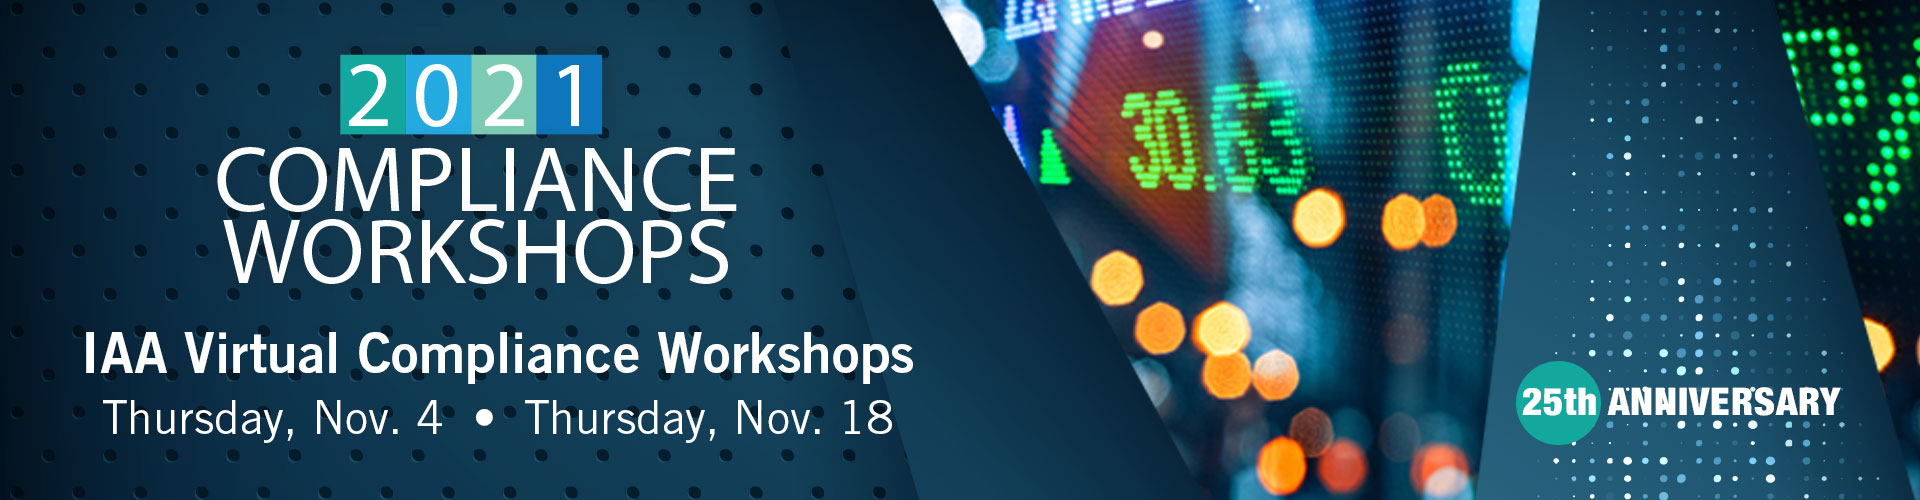 2021 Compliance Workshops - IAA Virtual Compliance Workshops - Thursday, Nov 4th - Thursday, Nov 18th. 25th Anniversary